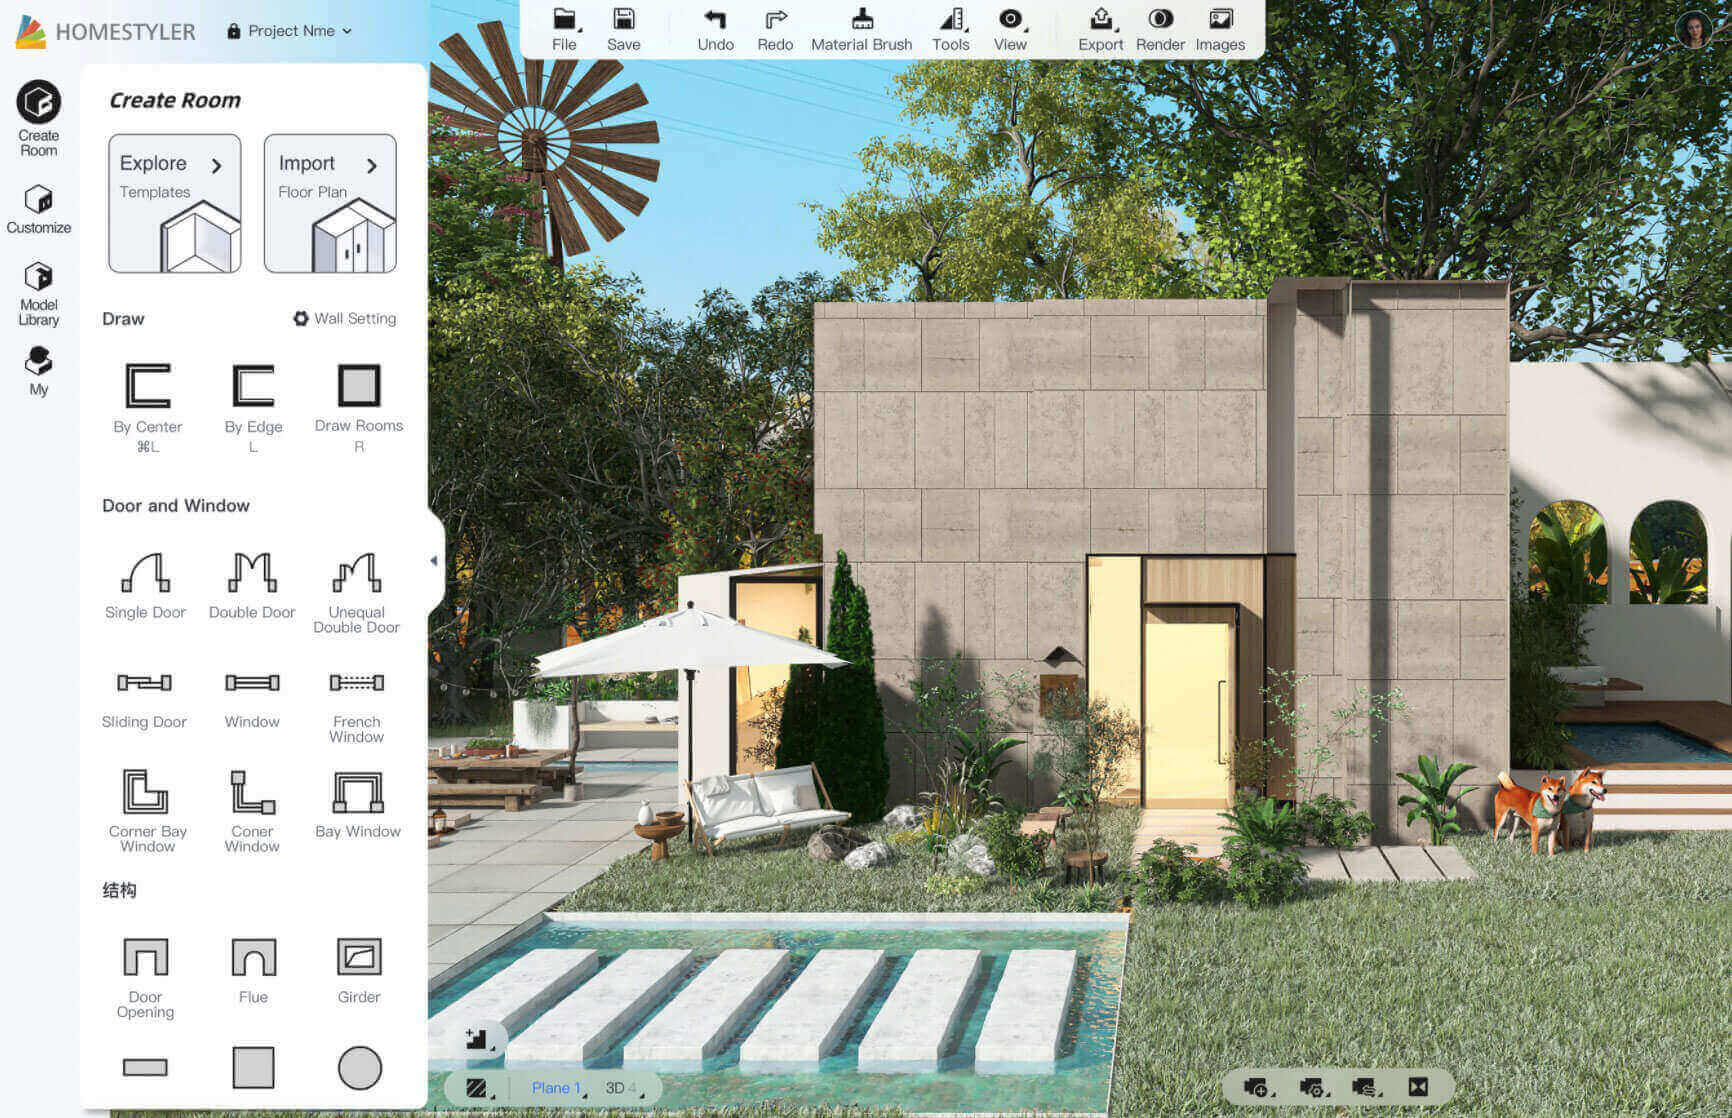 Floor Plan Creator Apps On Google Play